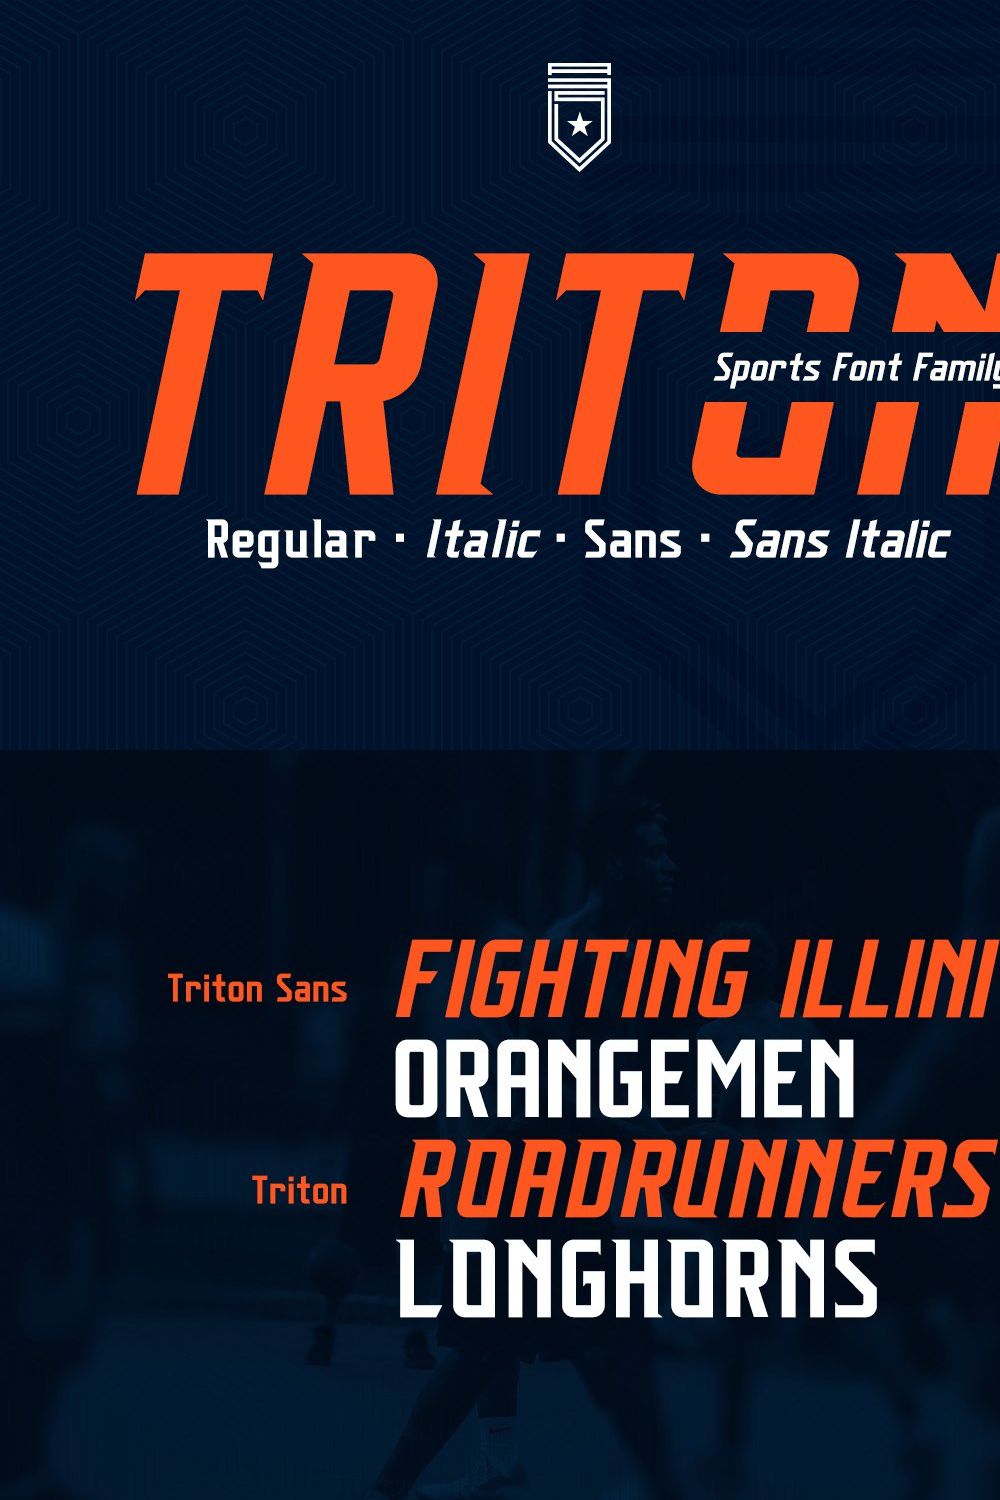 Triton Sports Font Family pinterest preview image.